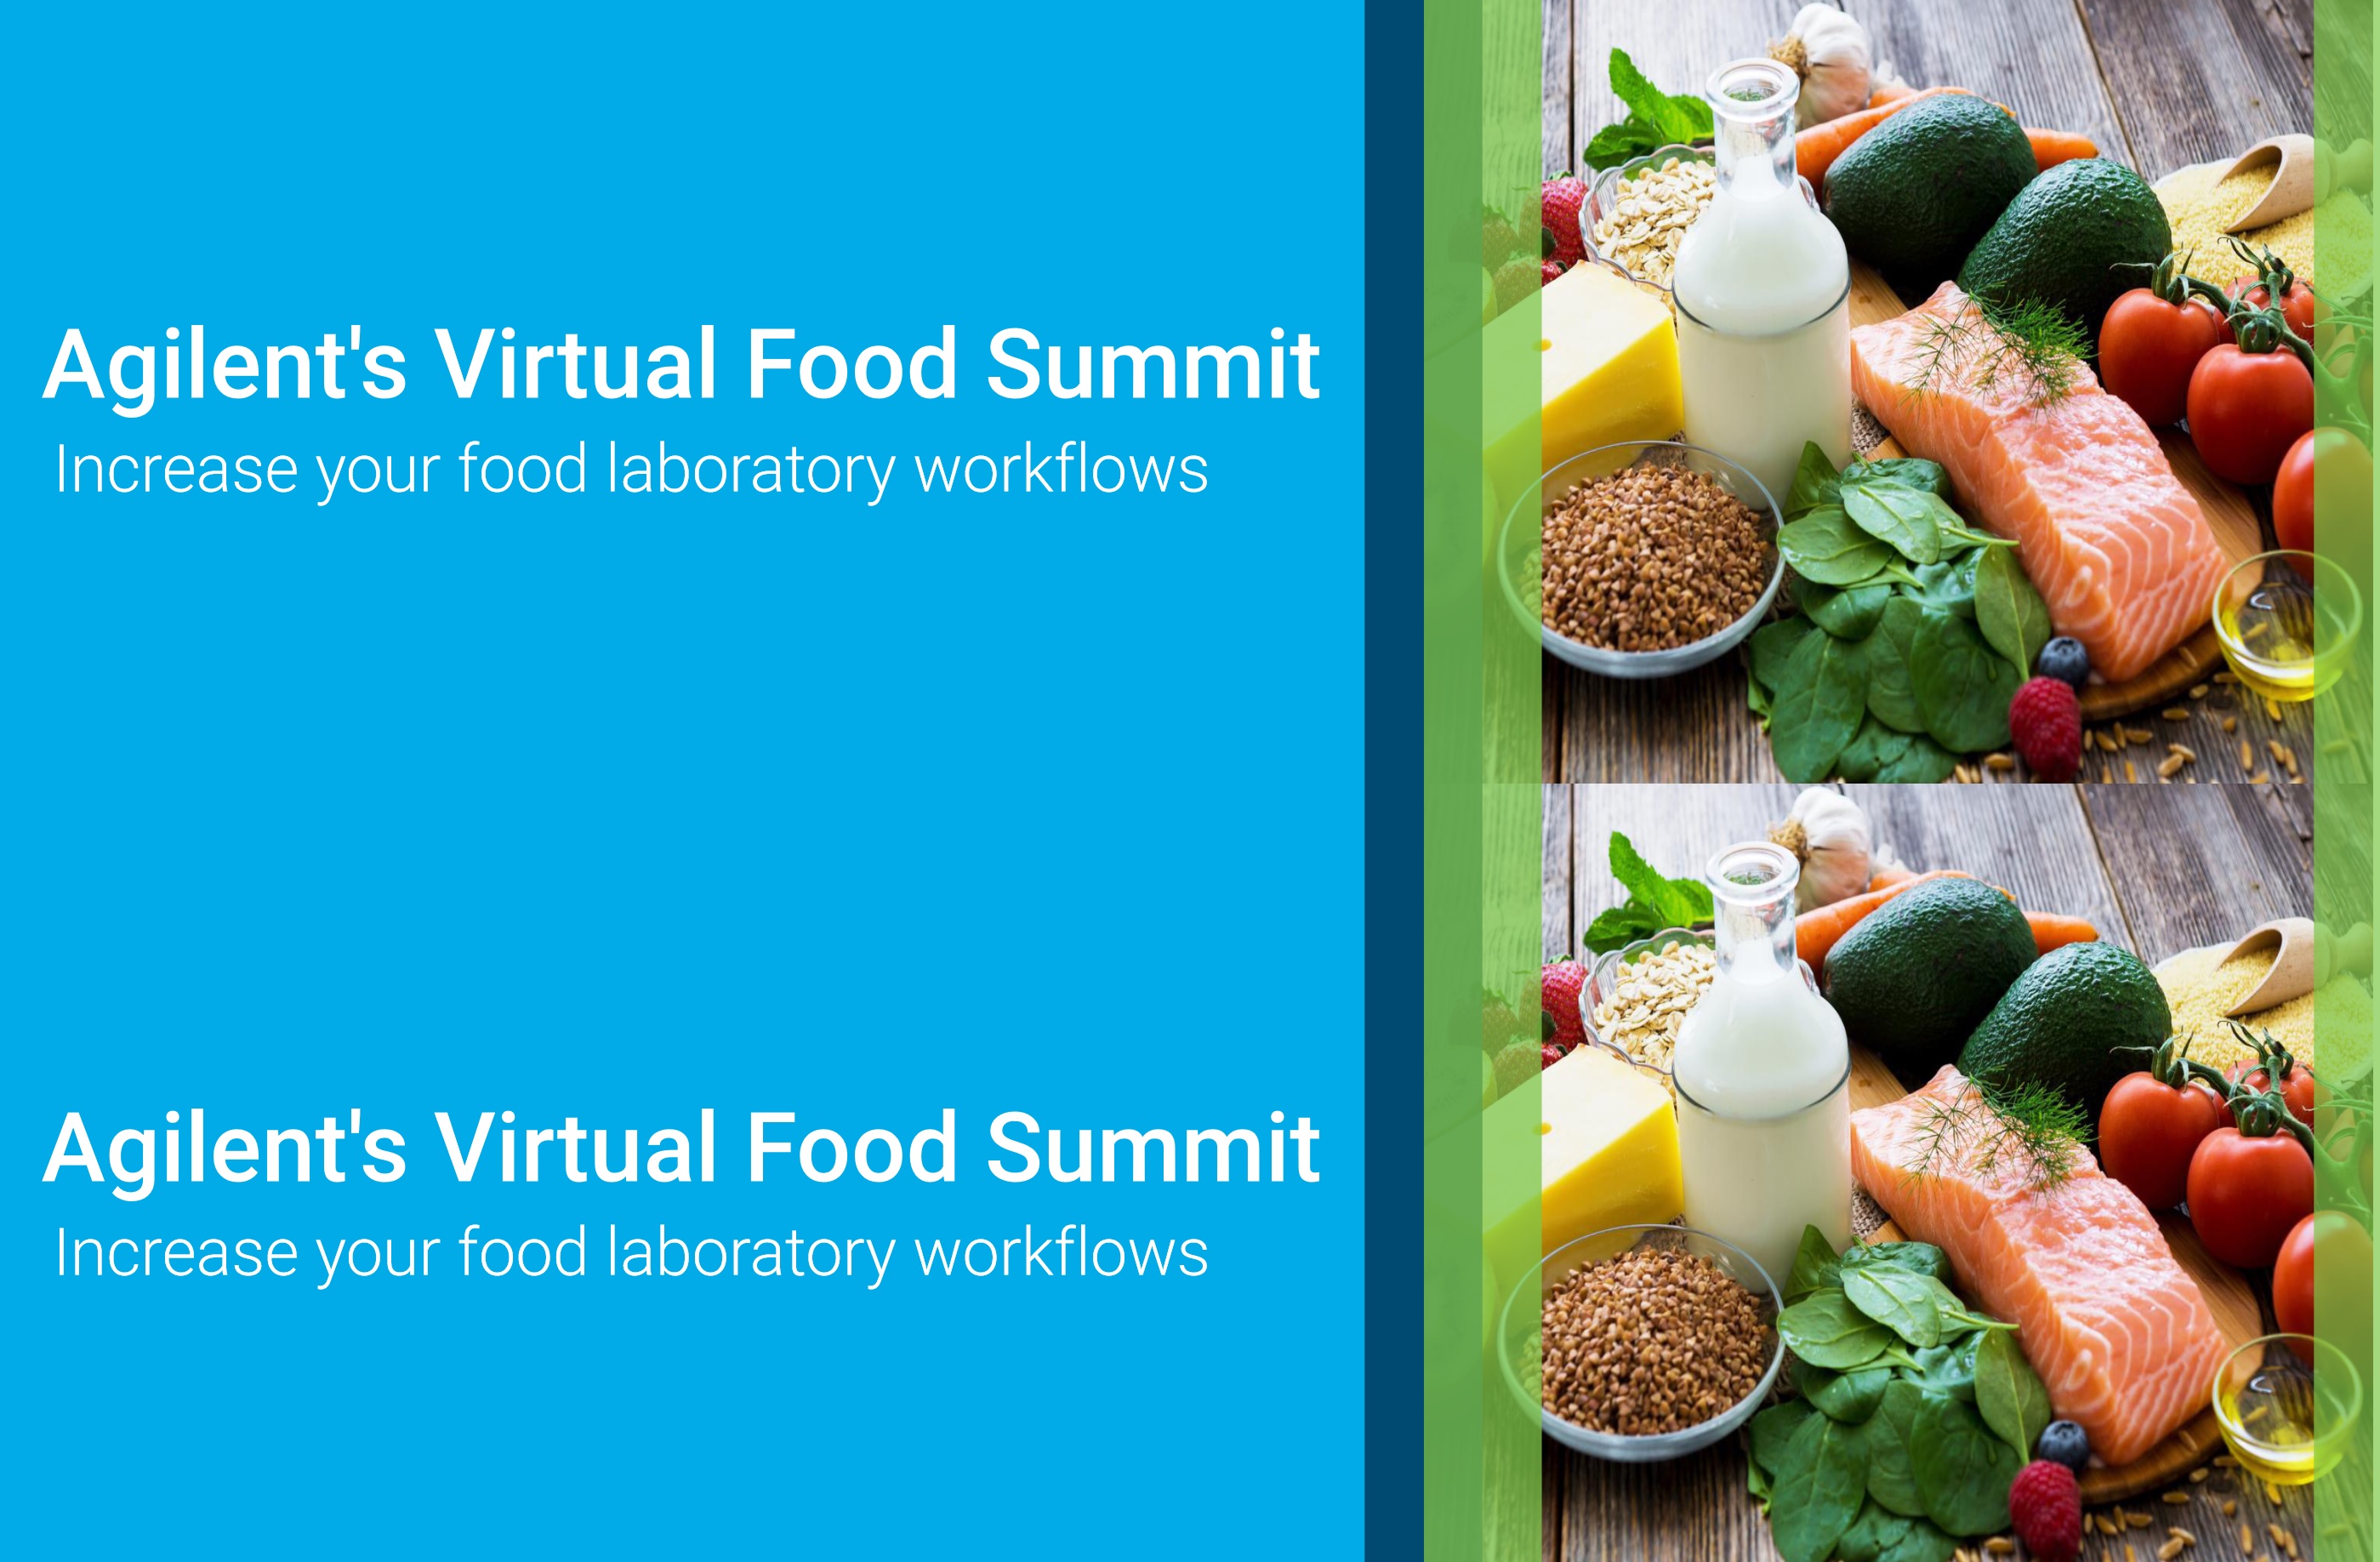 Agilent Technologies: Agilent Virtual Food Summit - Part II Food for Thought